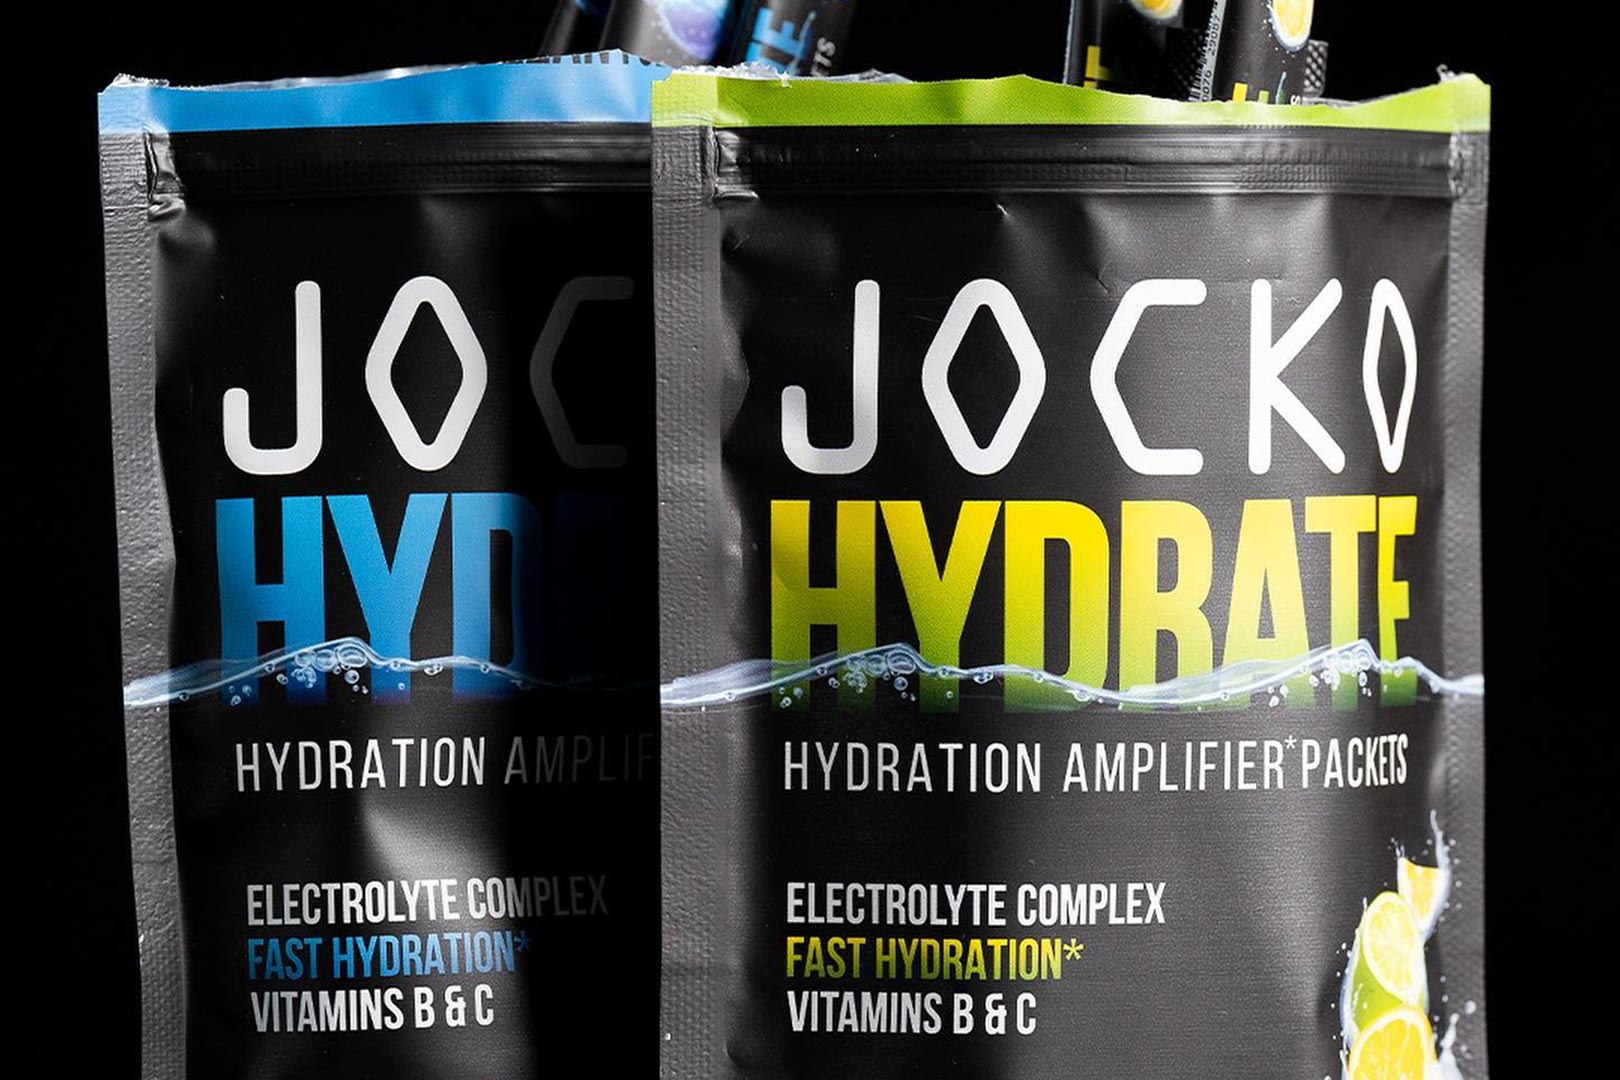 Jocko Hydrate